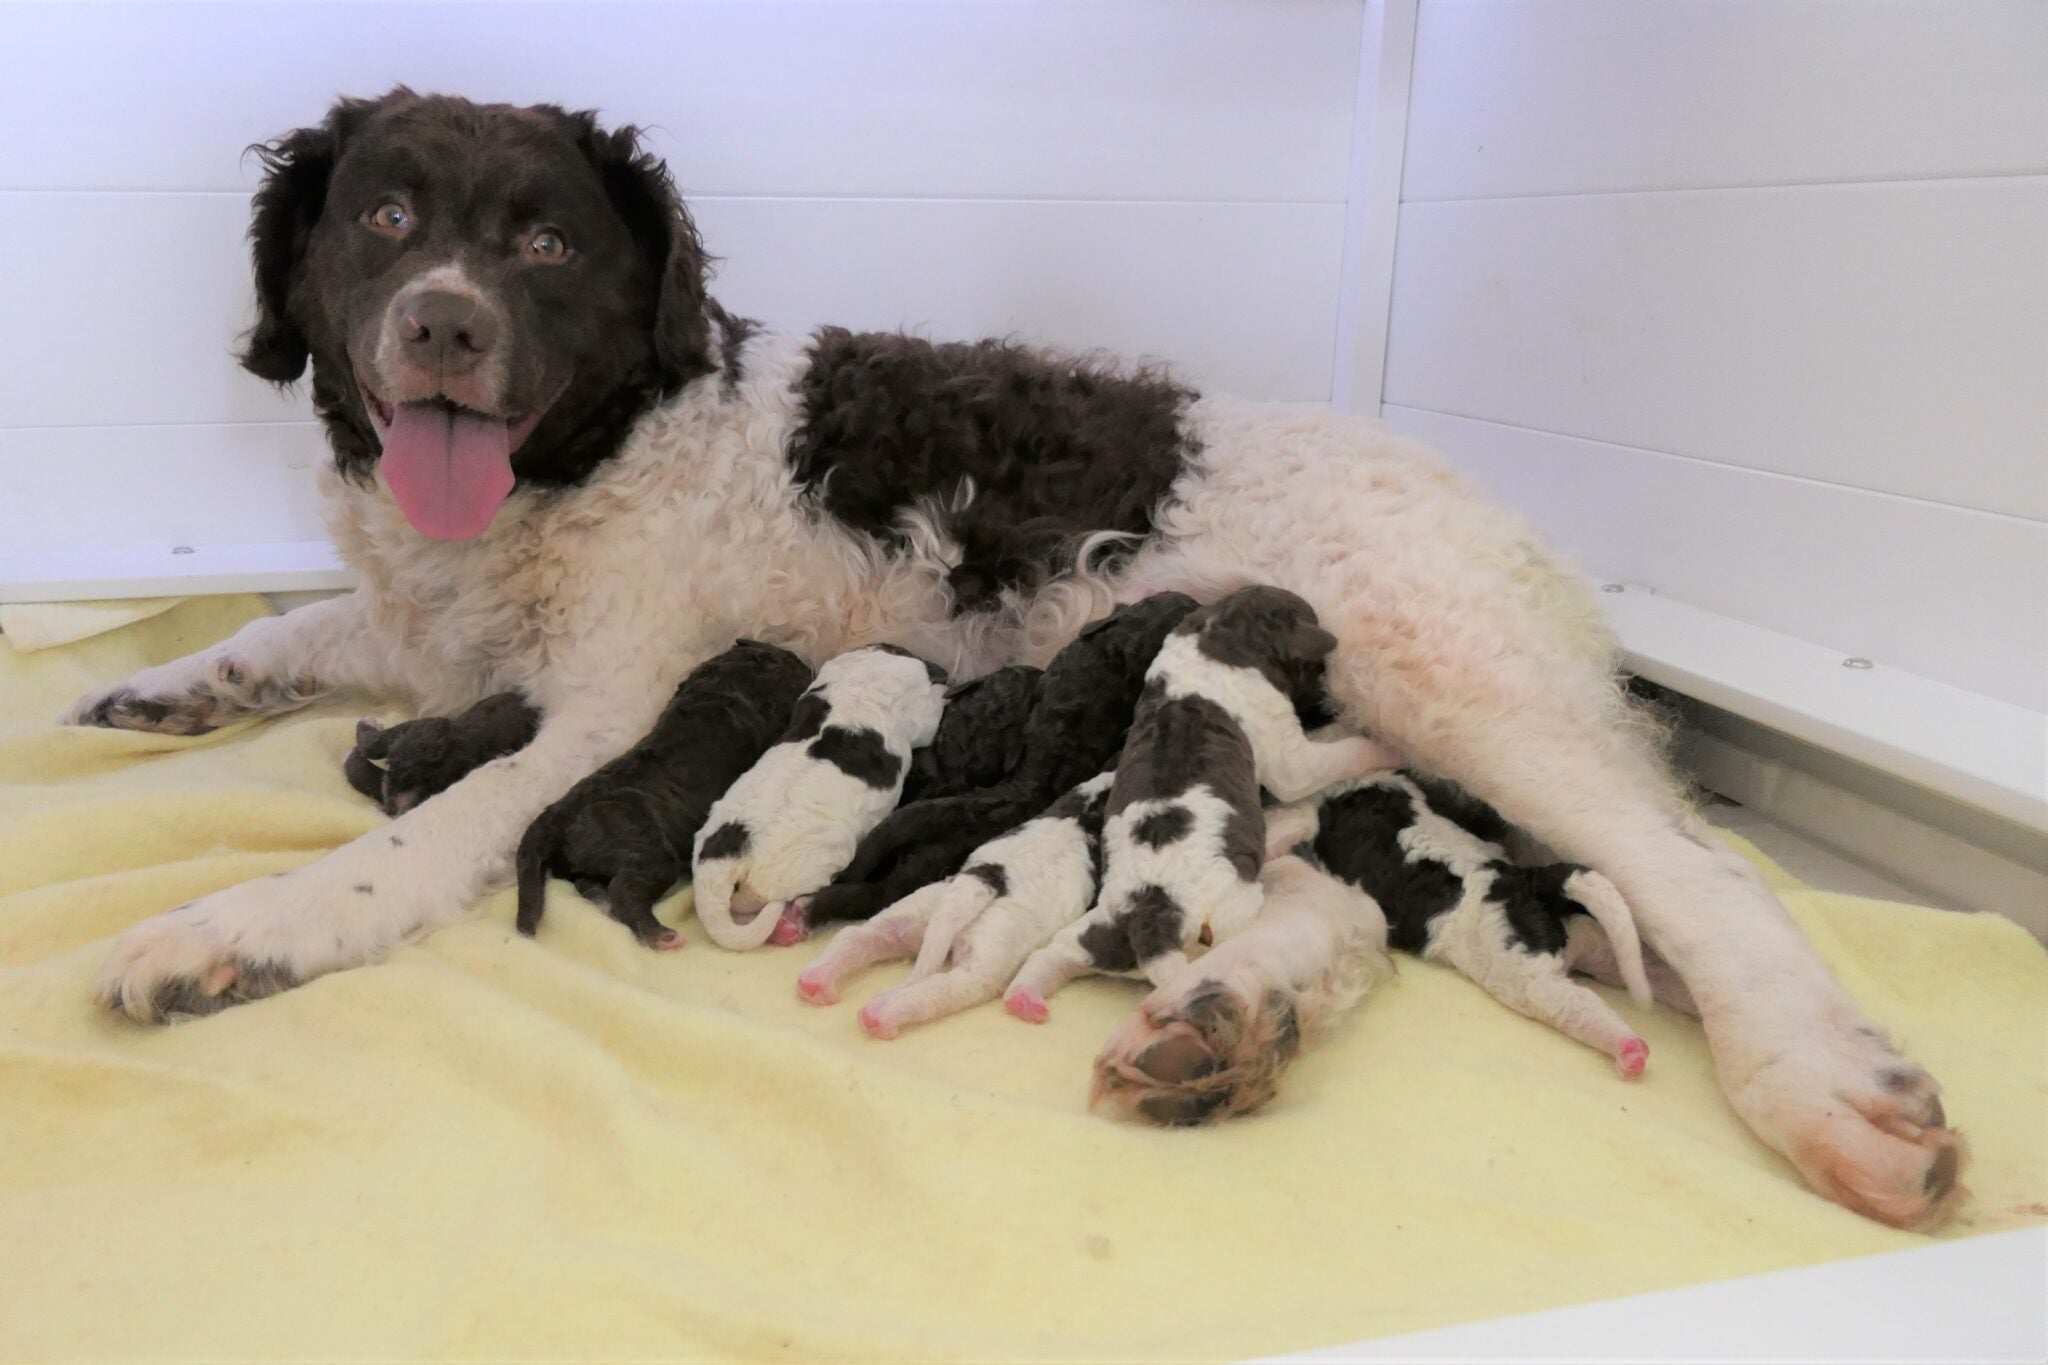 Aafke the Wetterhoun with her eight pups Ben, Jonny, Billy, Dan, Jason, Poppy, Maggie, and Marlie